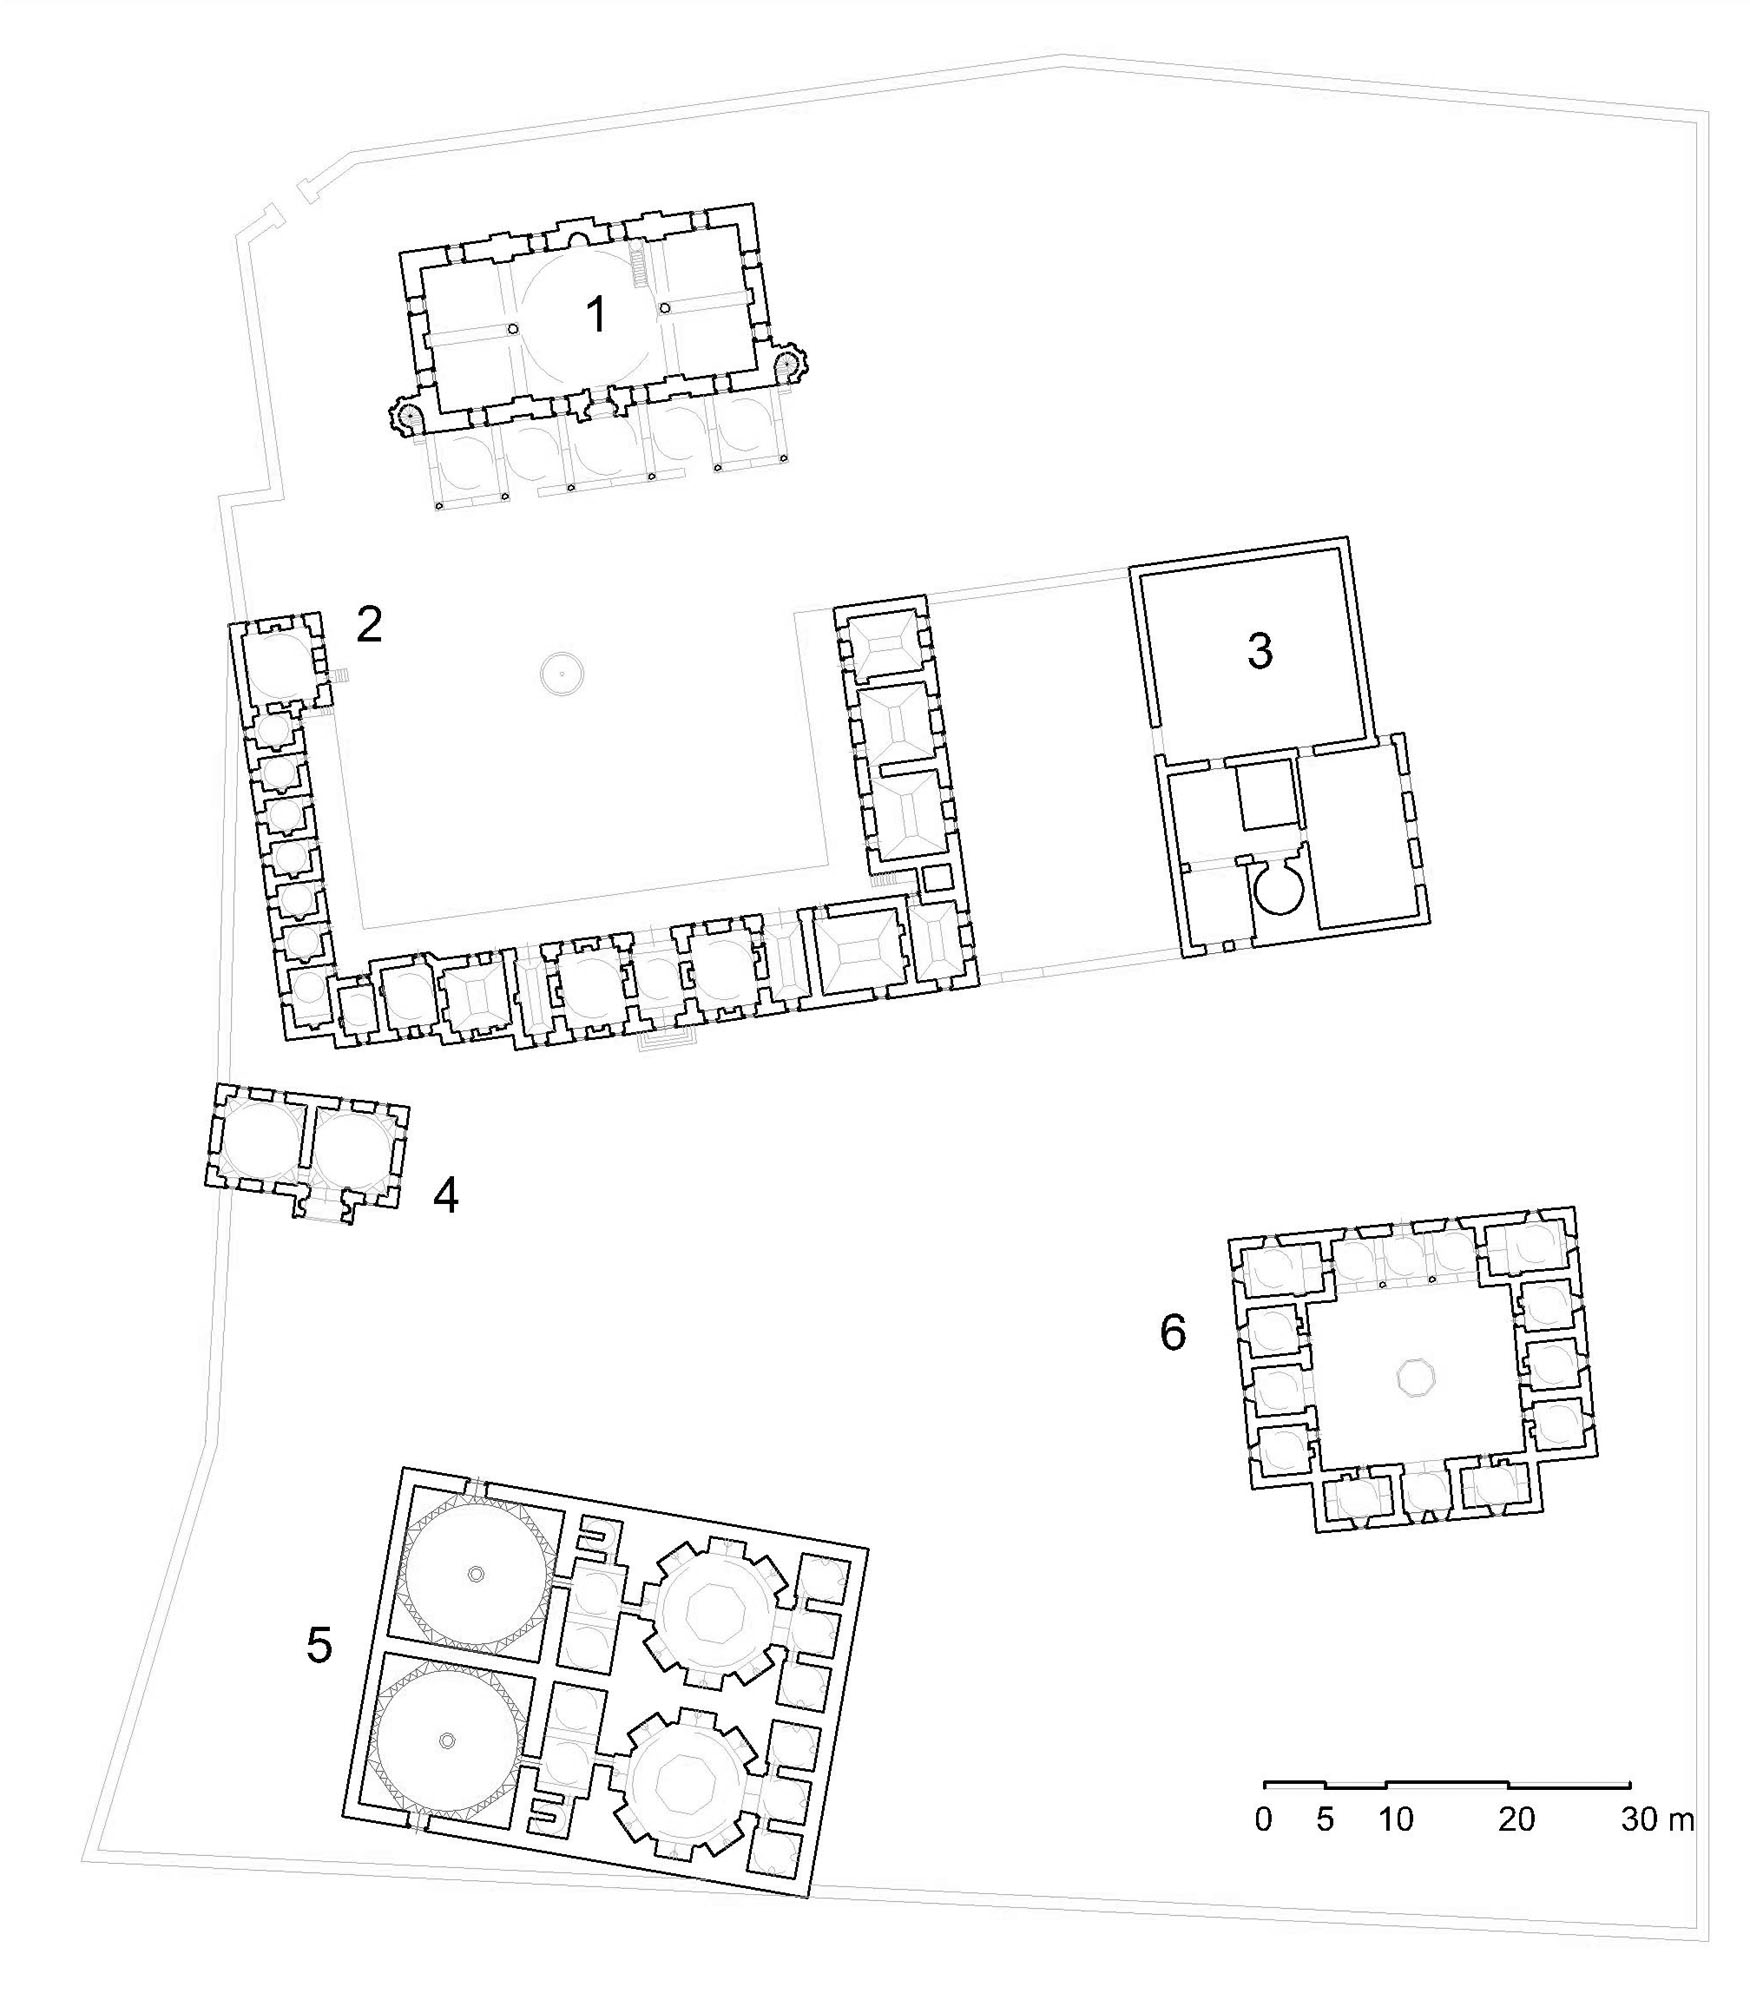 Floor plan of complex, showing  (1) mosque, (2) madrasa, (3) hospice, (4) elementary school, (5) double bath, (6) hospital